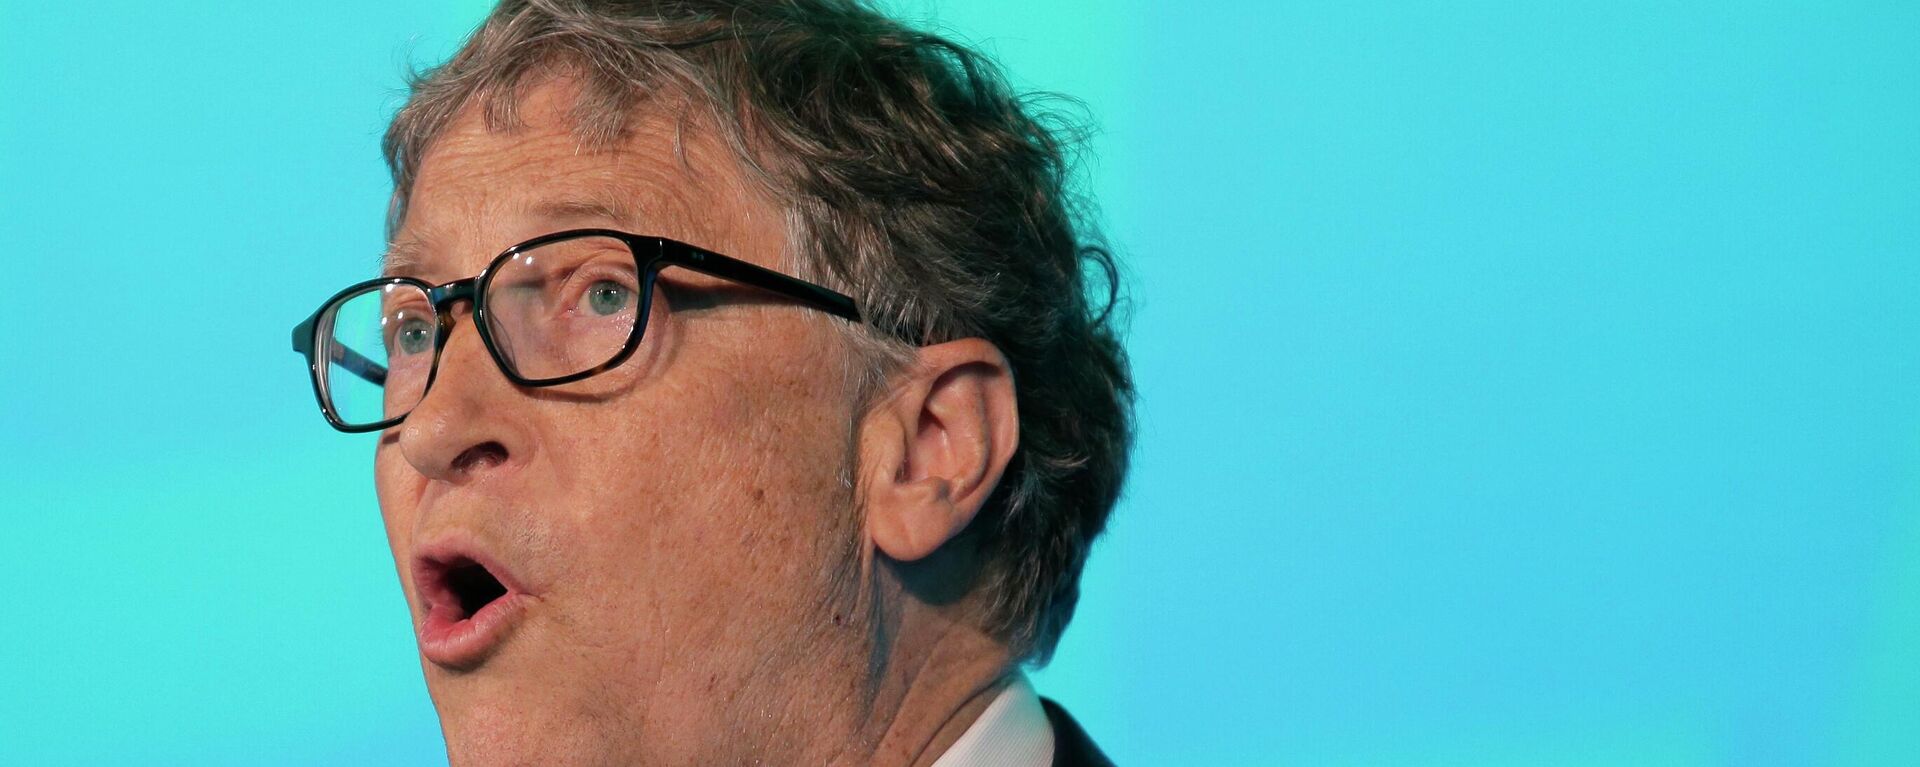 Bill Gates, cofundador de Microsoft - Sputnik Mundo, 1920, 18.11.2021